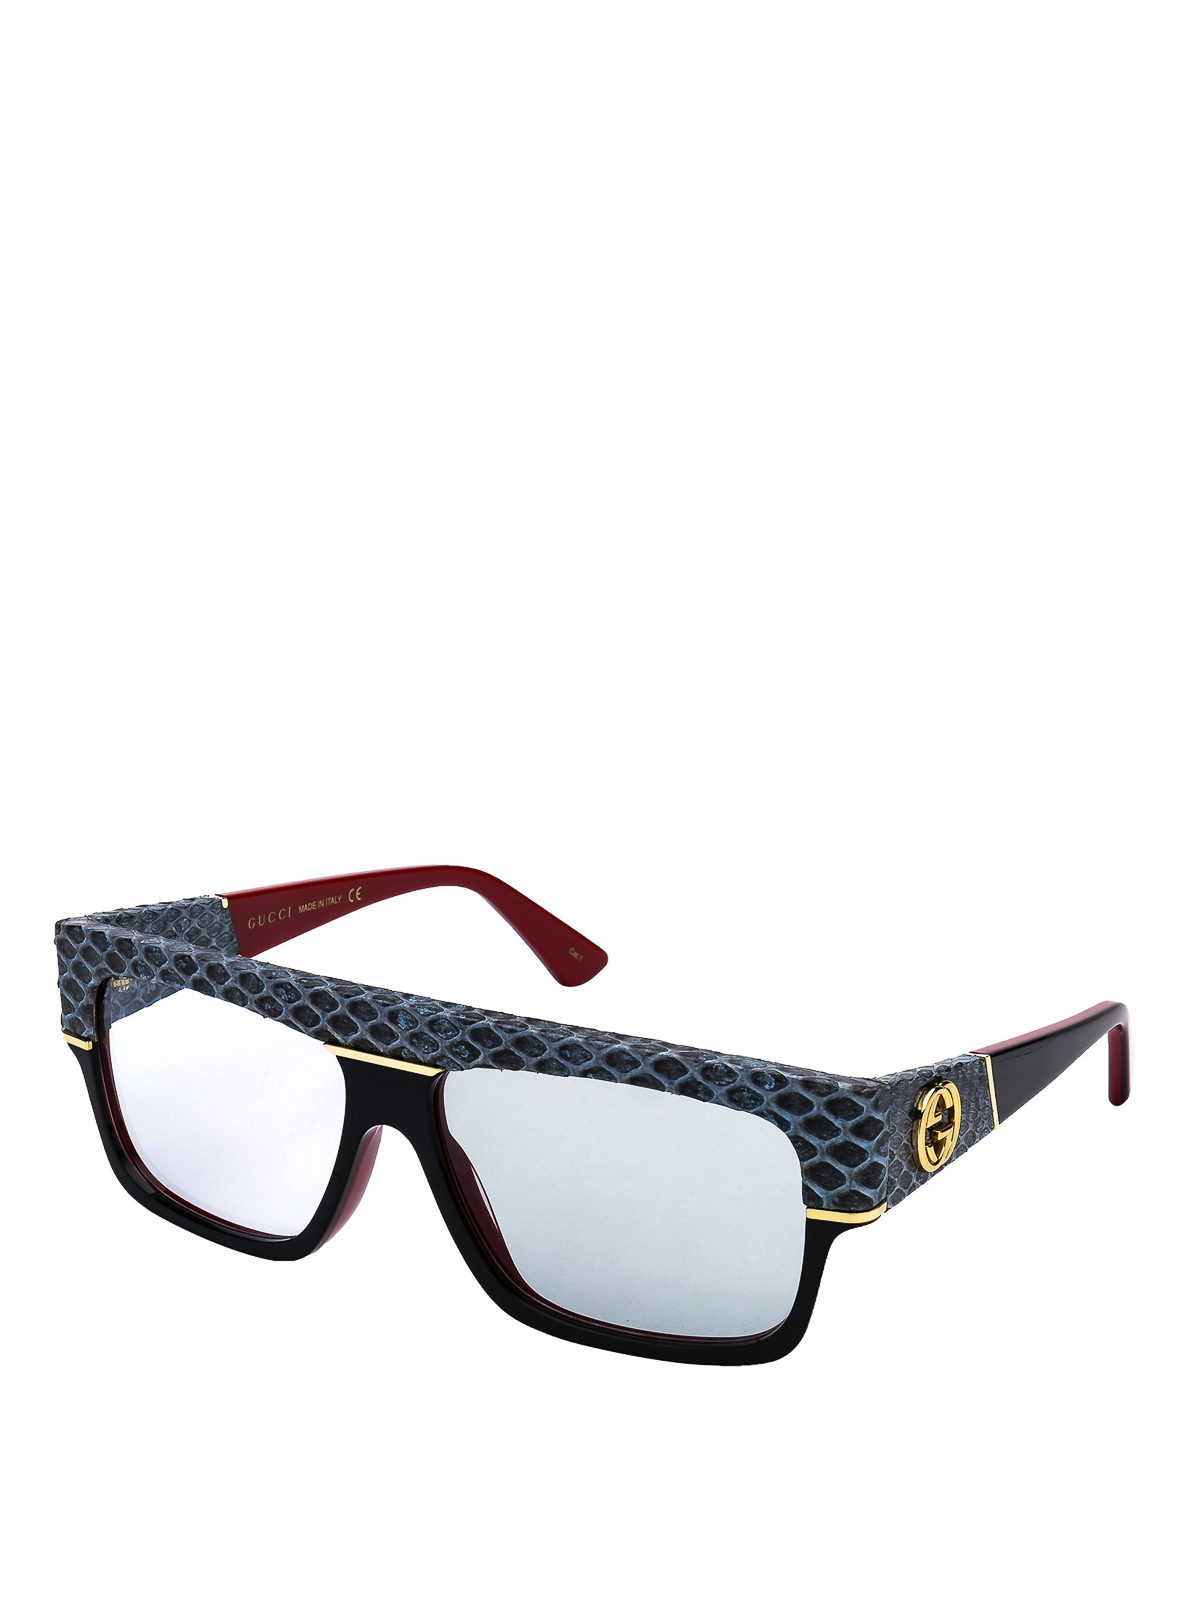 Grey python print acetate sunglasses 